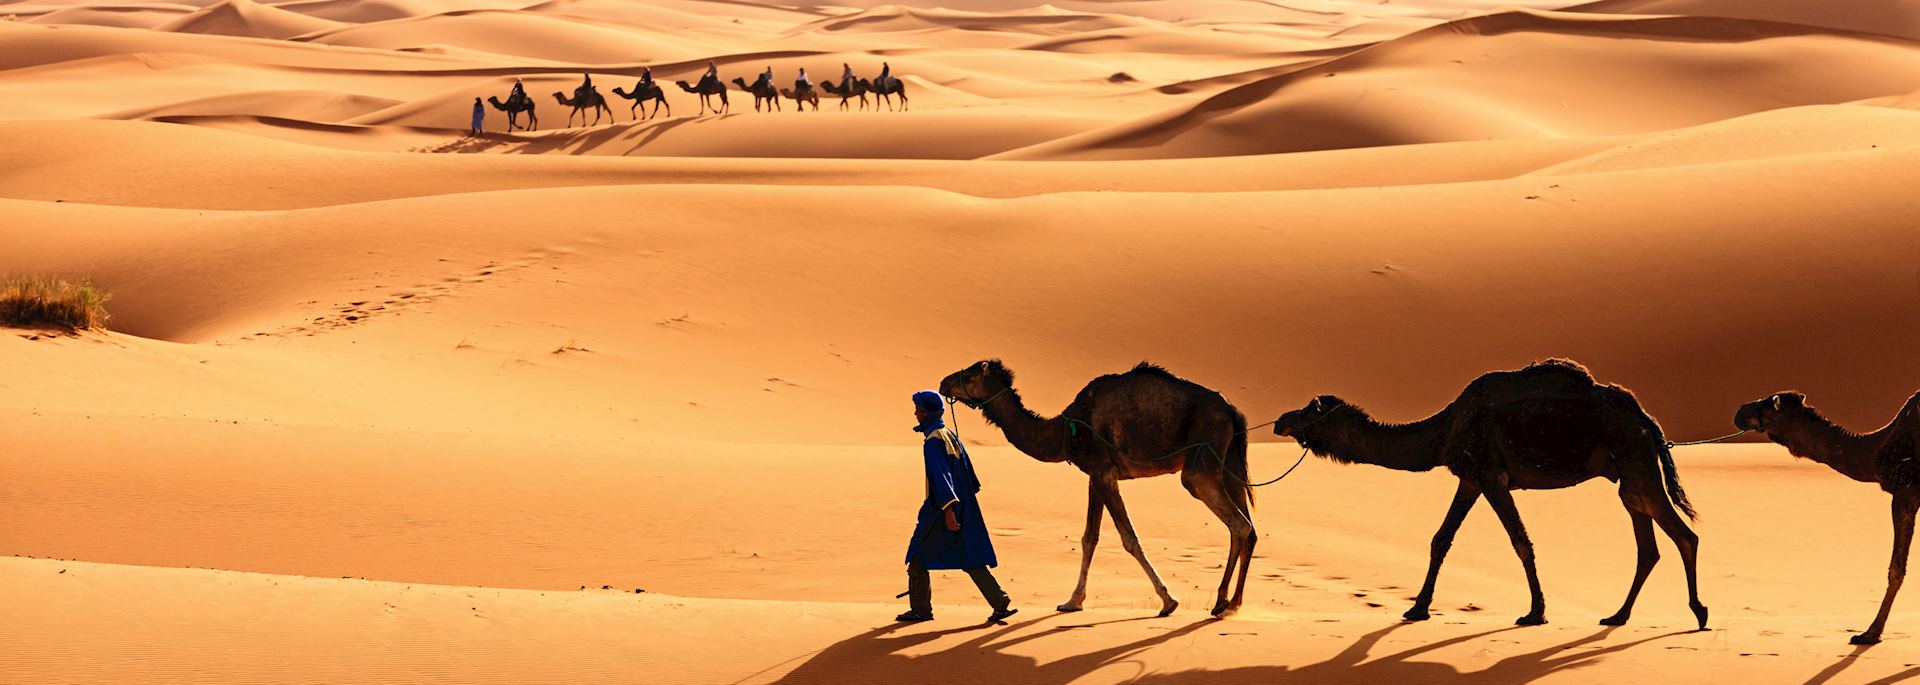 Tuareg camel train in the Western Sahara Desert